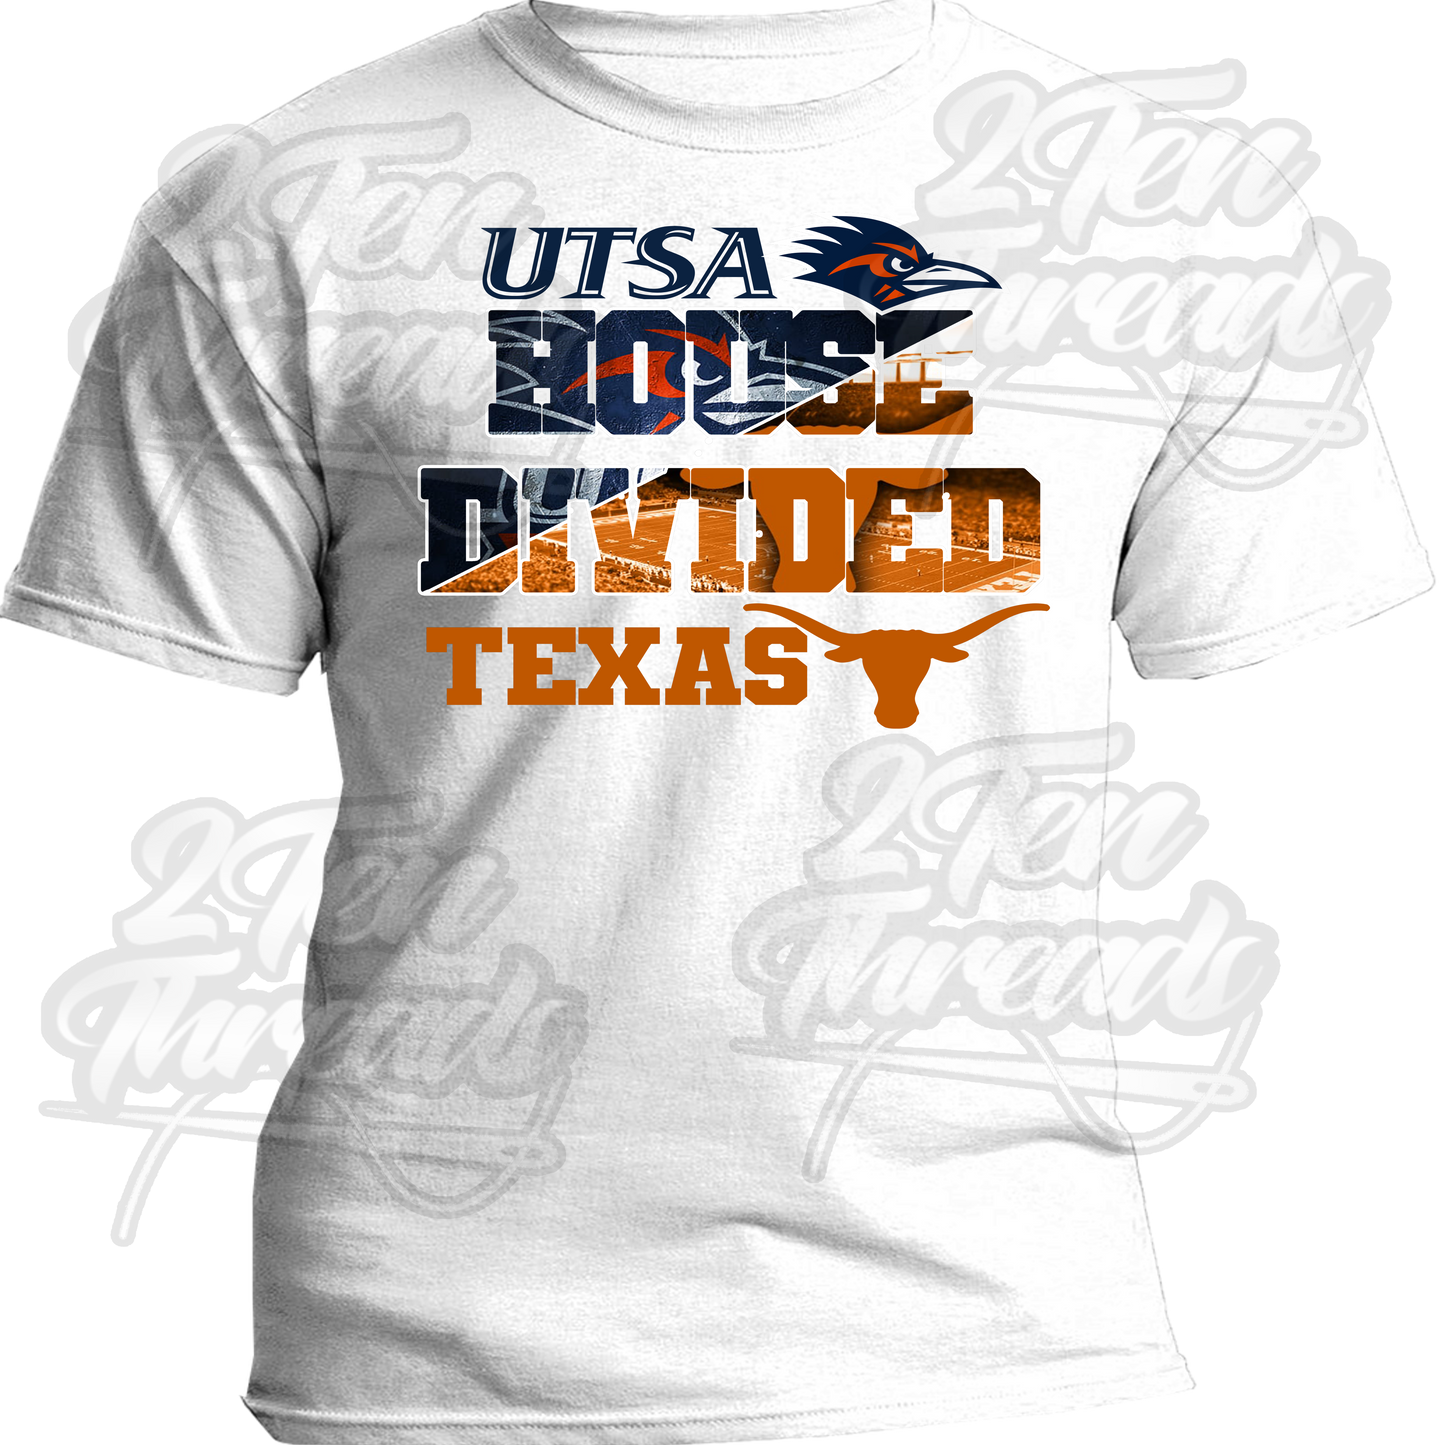 UTSA / Texas House Divided Shirt